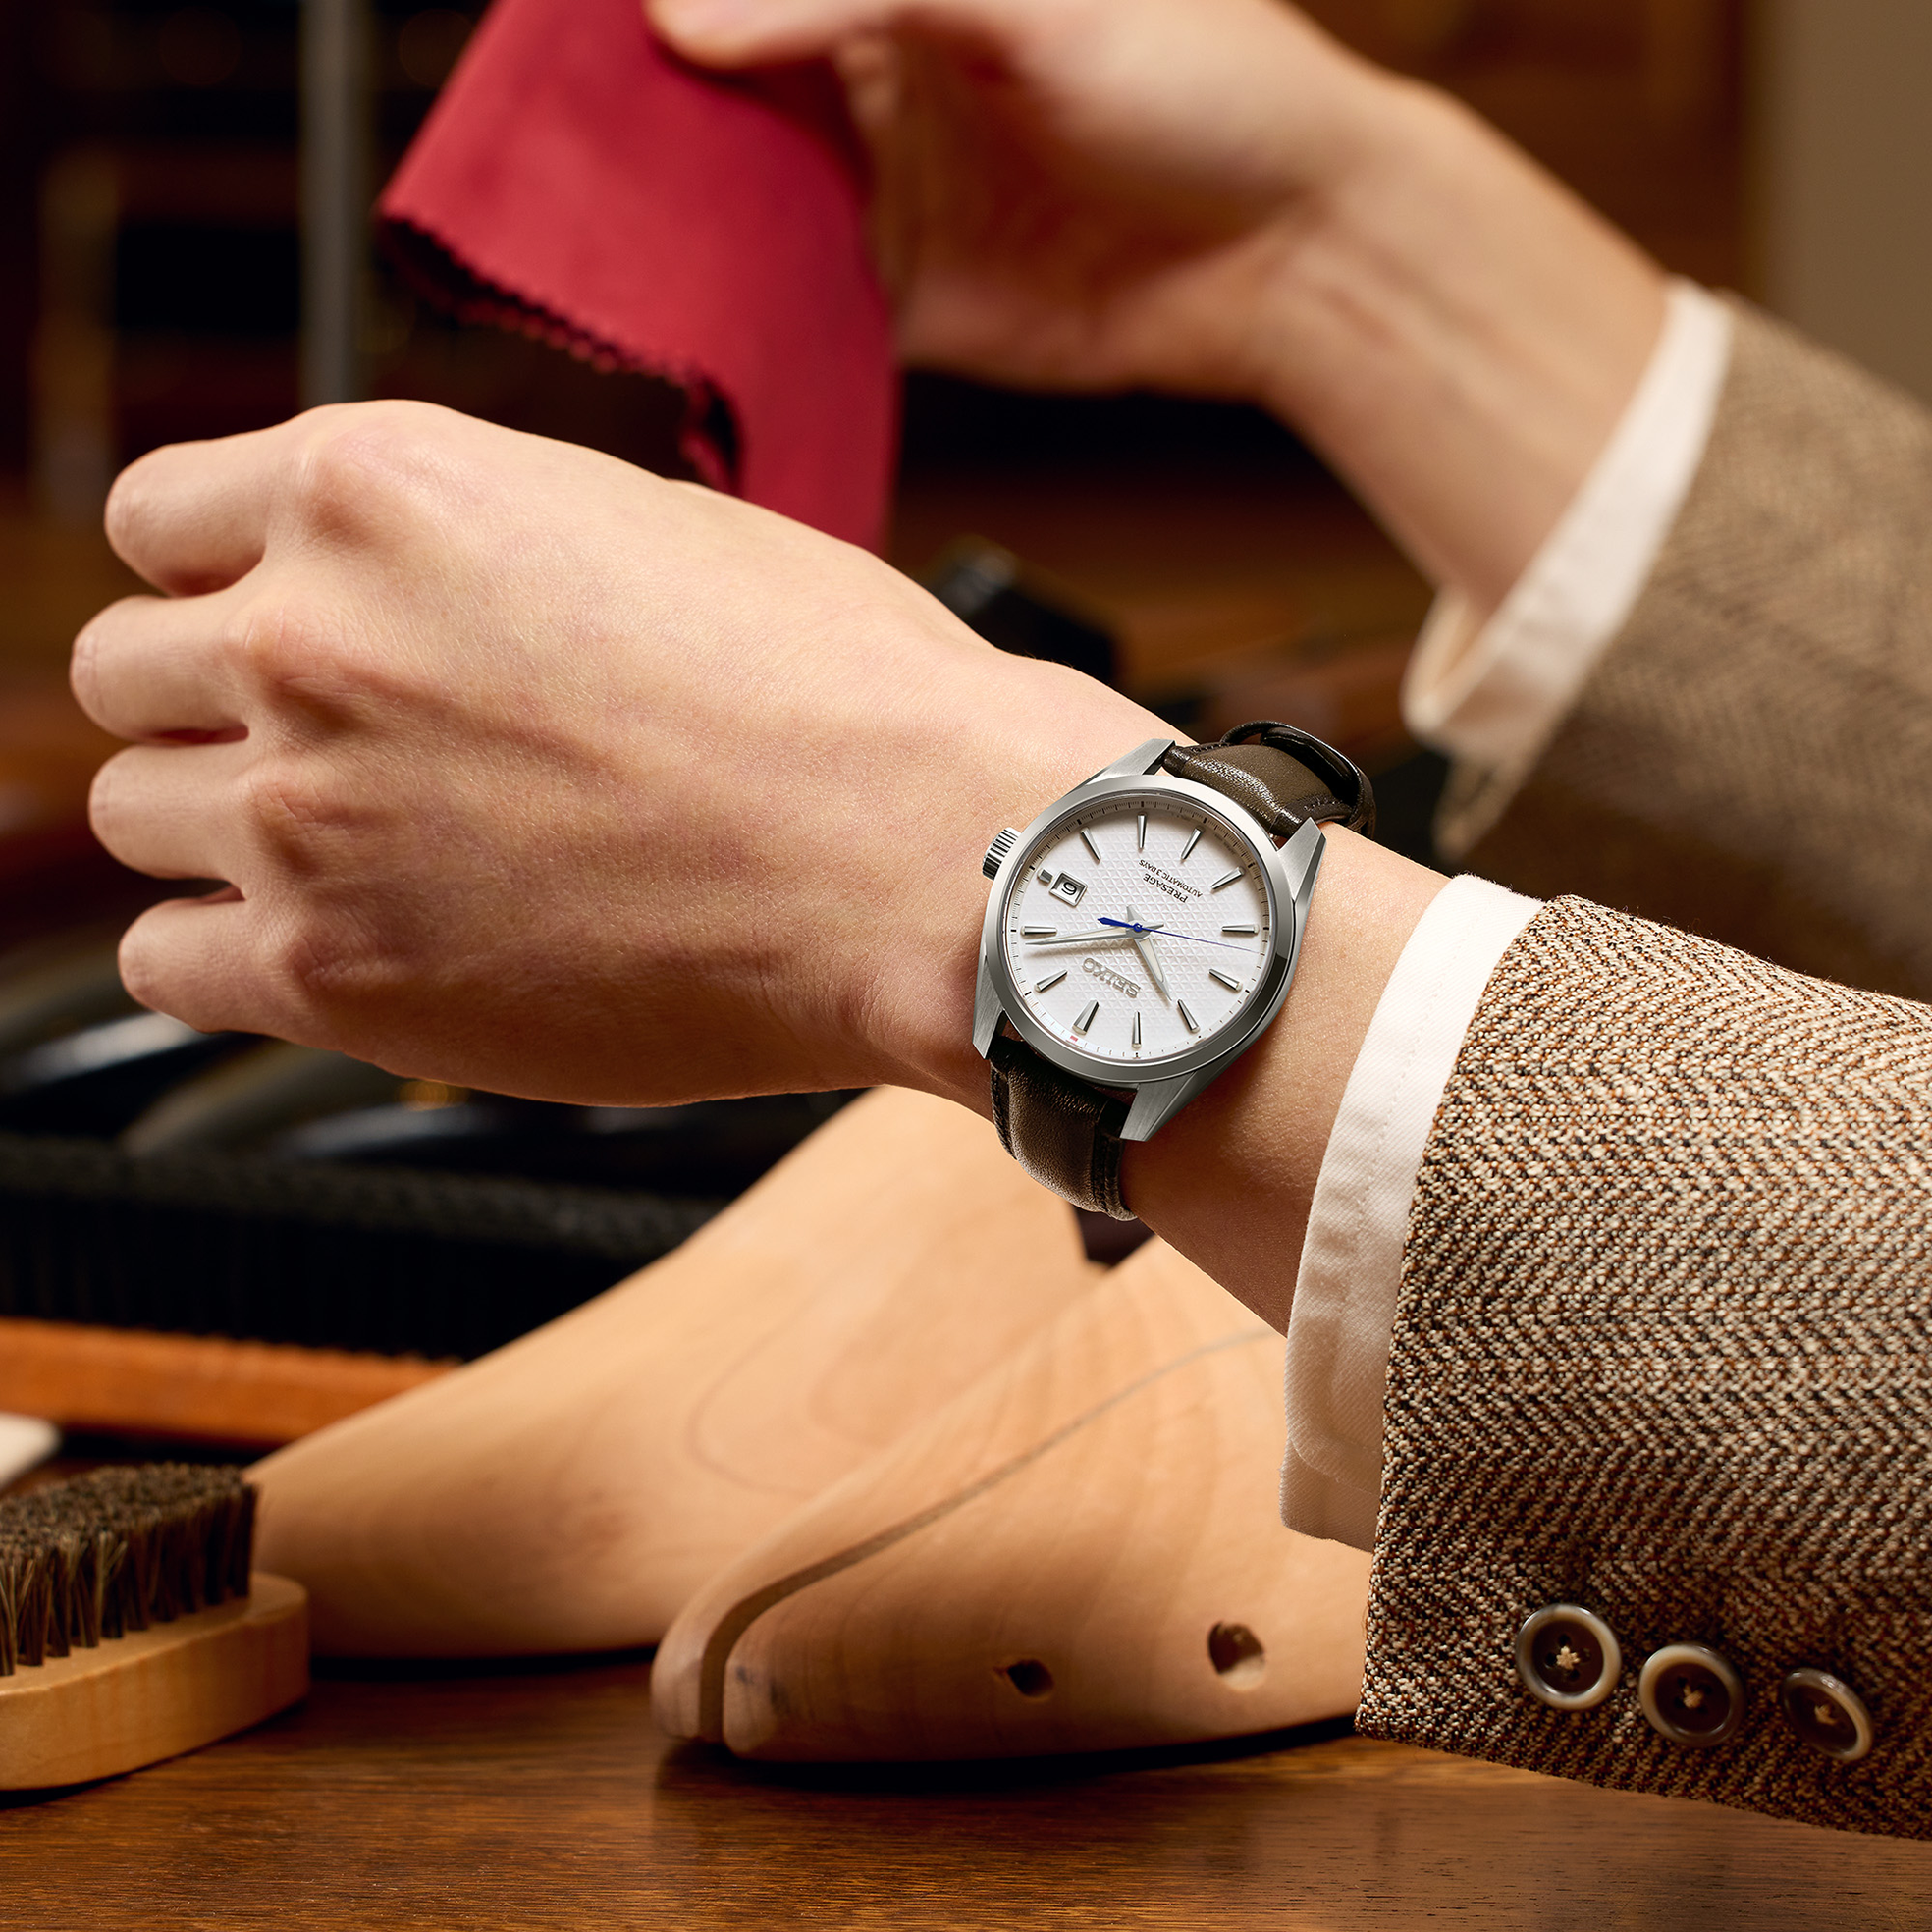 Presage Sharp-Edged Series Seiko 110th Anniversary of Watchmaking Limited Edition SPB413